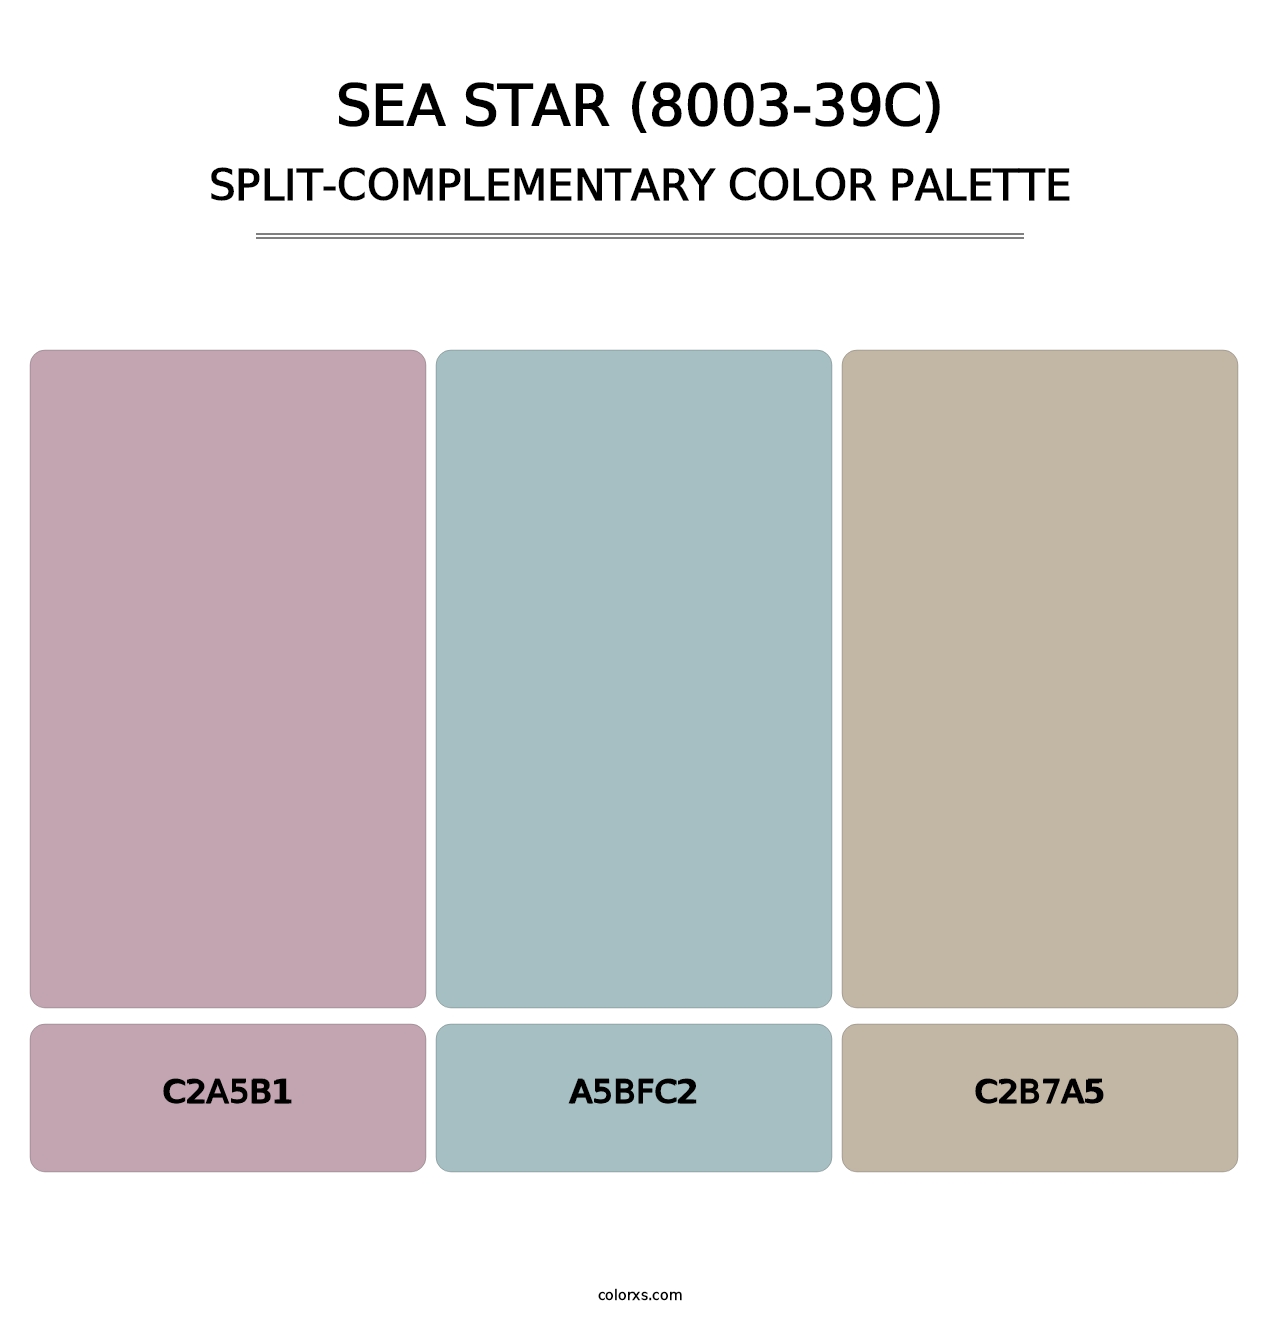 Sea Star (8003-39C) - Split-Complementary Color Palette